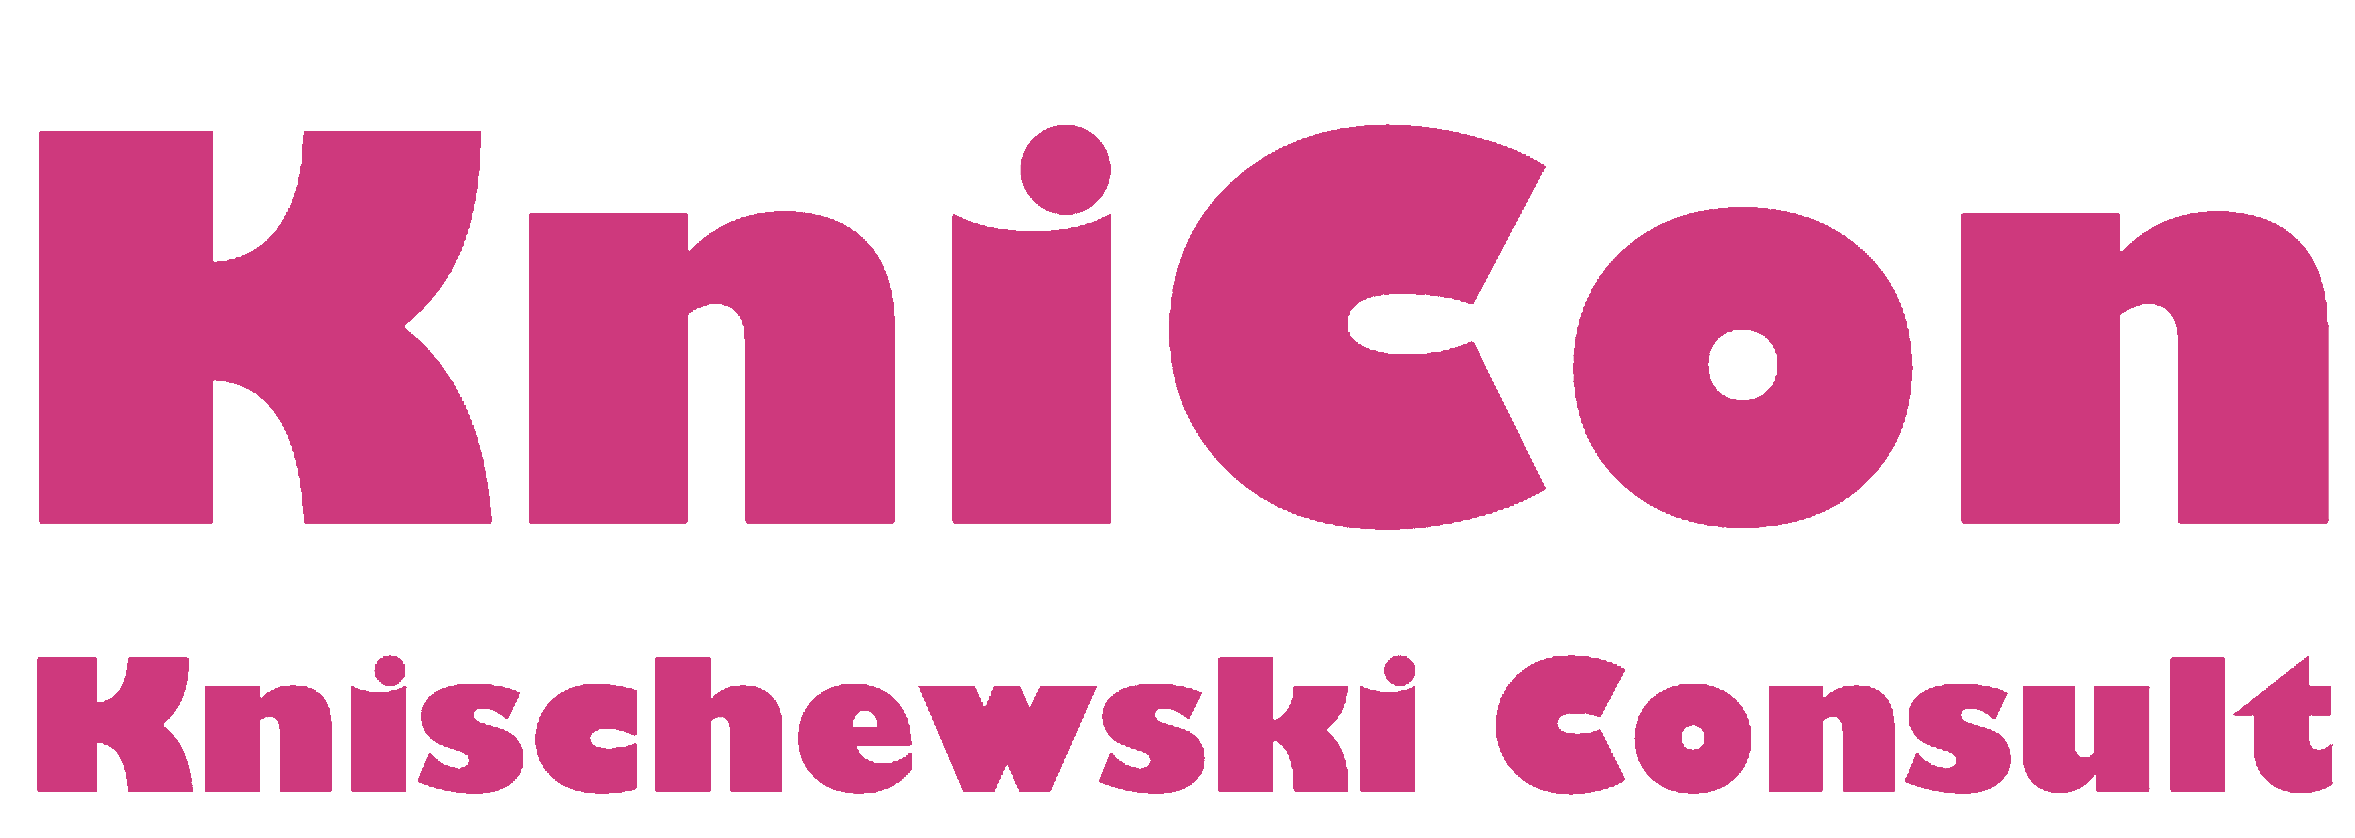 KniCon Logo